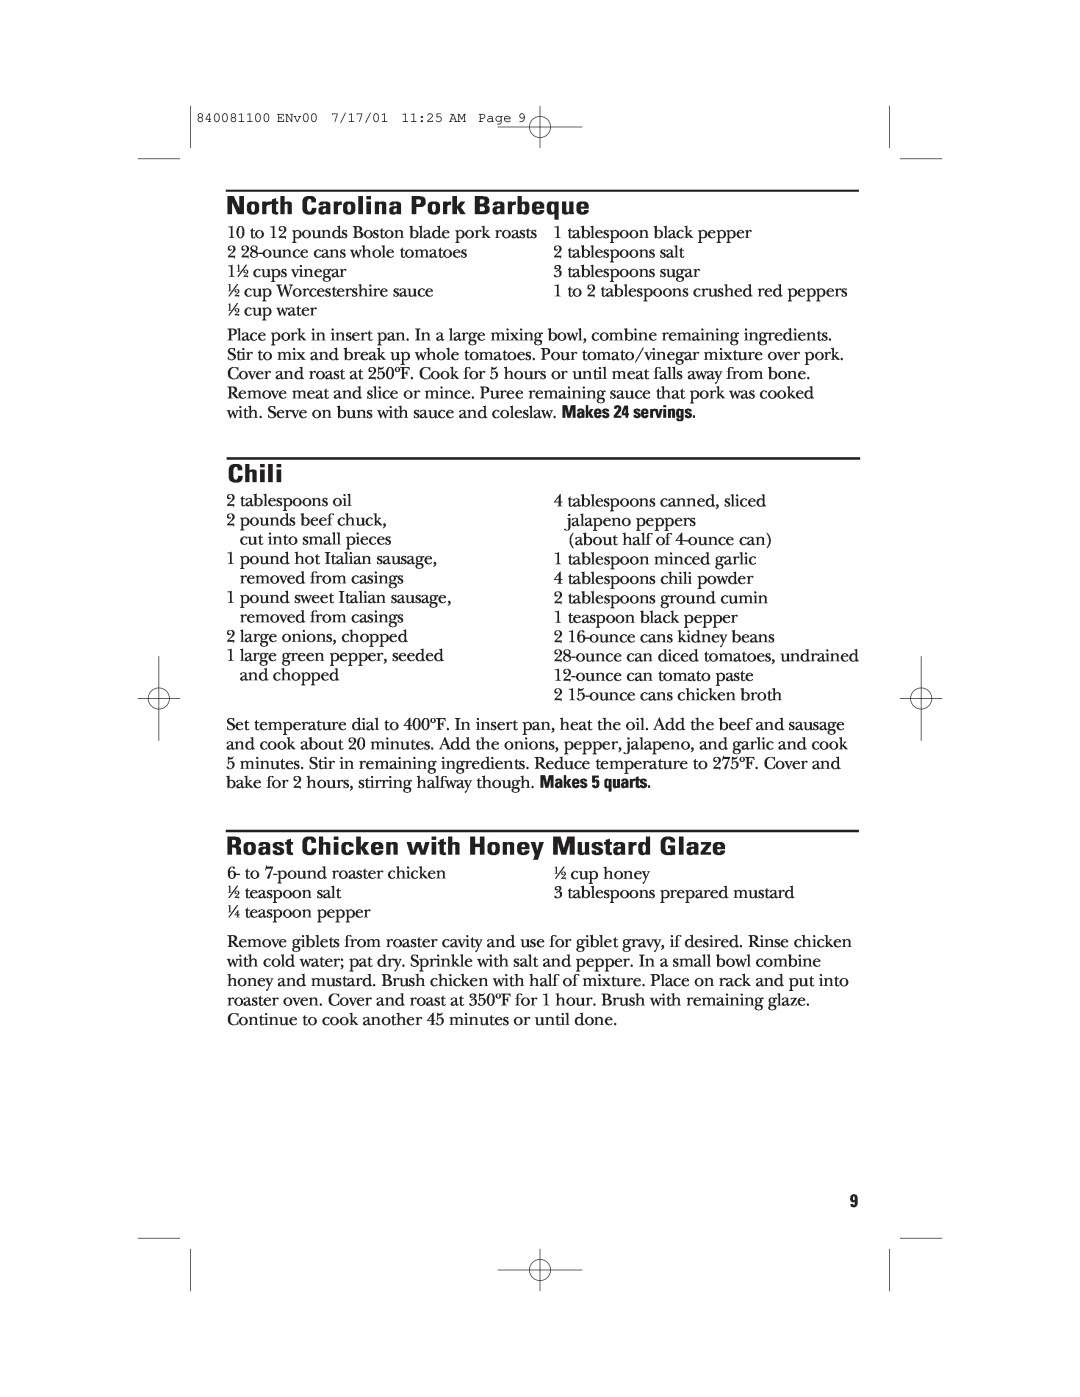 GE 840081100 manual North Carolina Pork Barbeque, Chili, Roast Chicken with Honey Mustard Glaze 